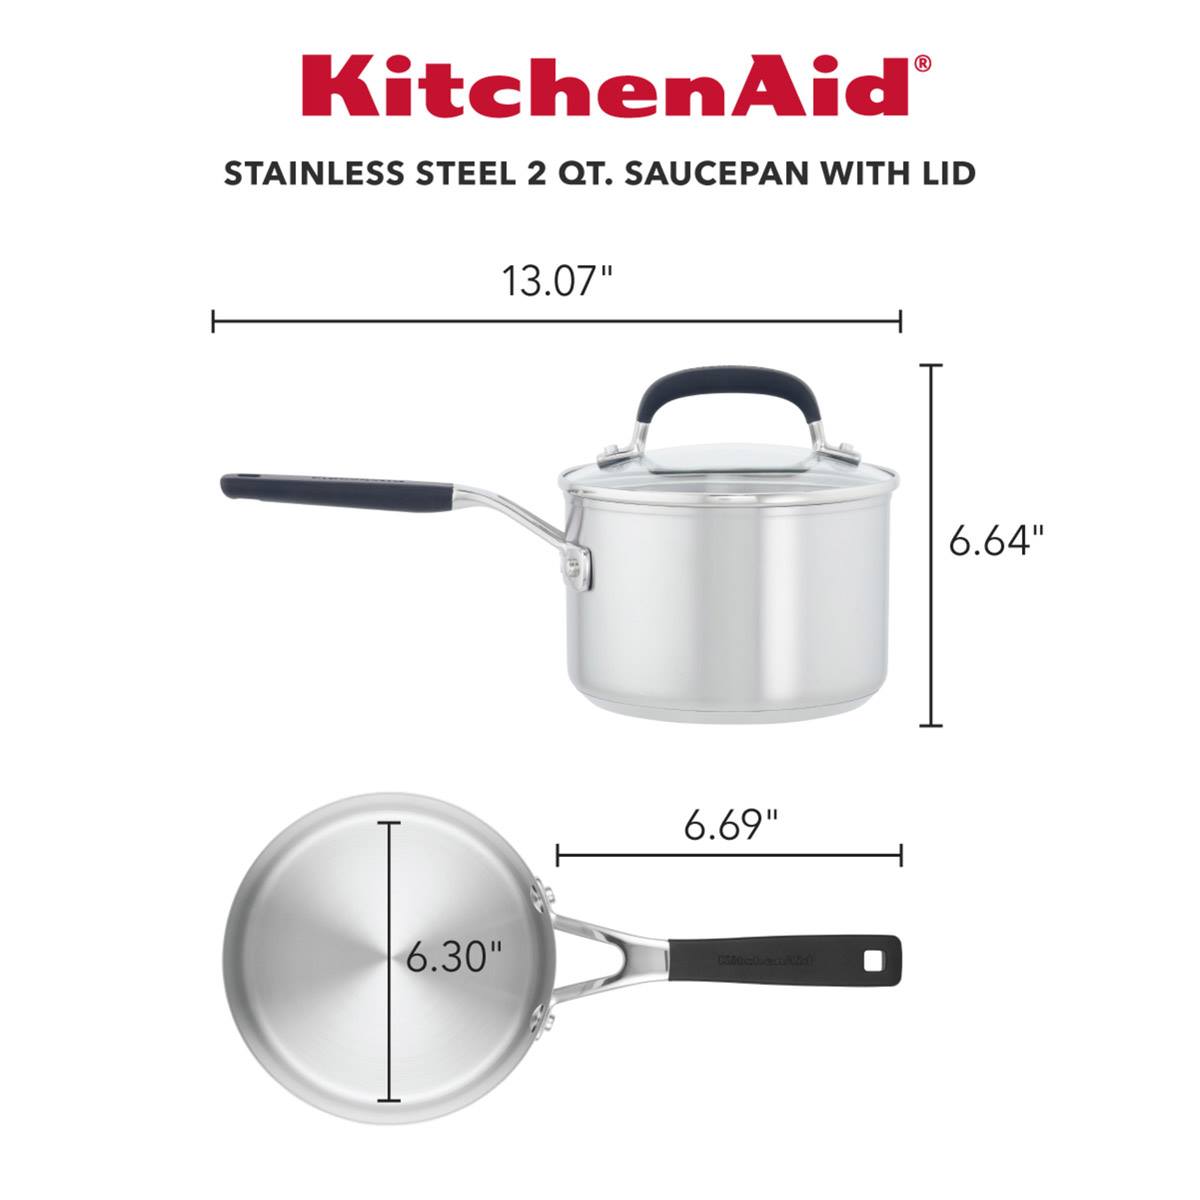 KitchenAid(R) 2qt. Stainless Steel Saucepan